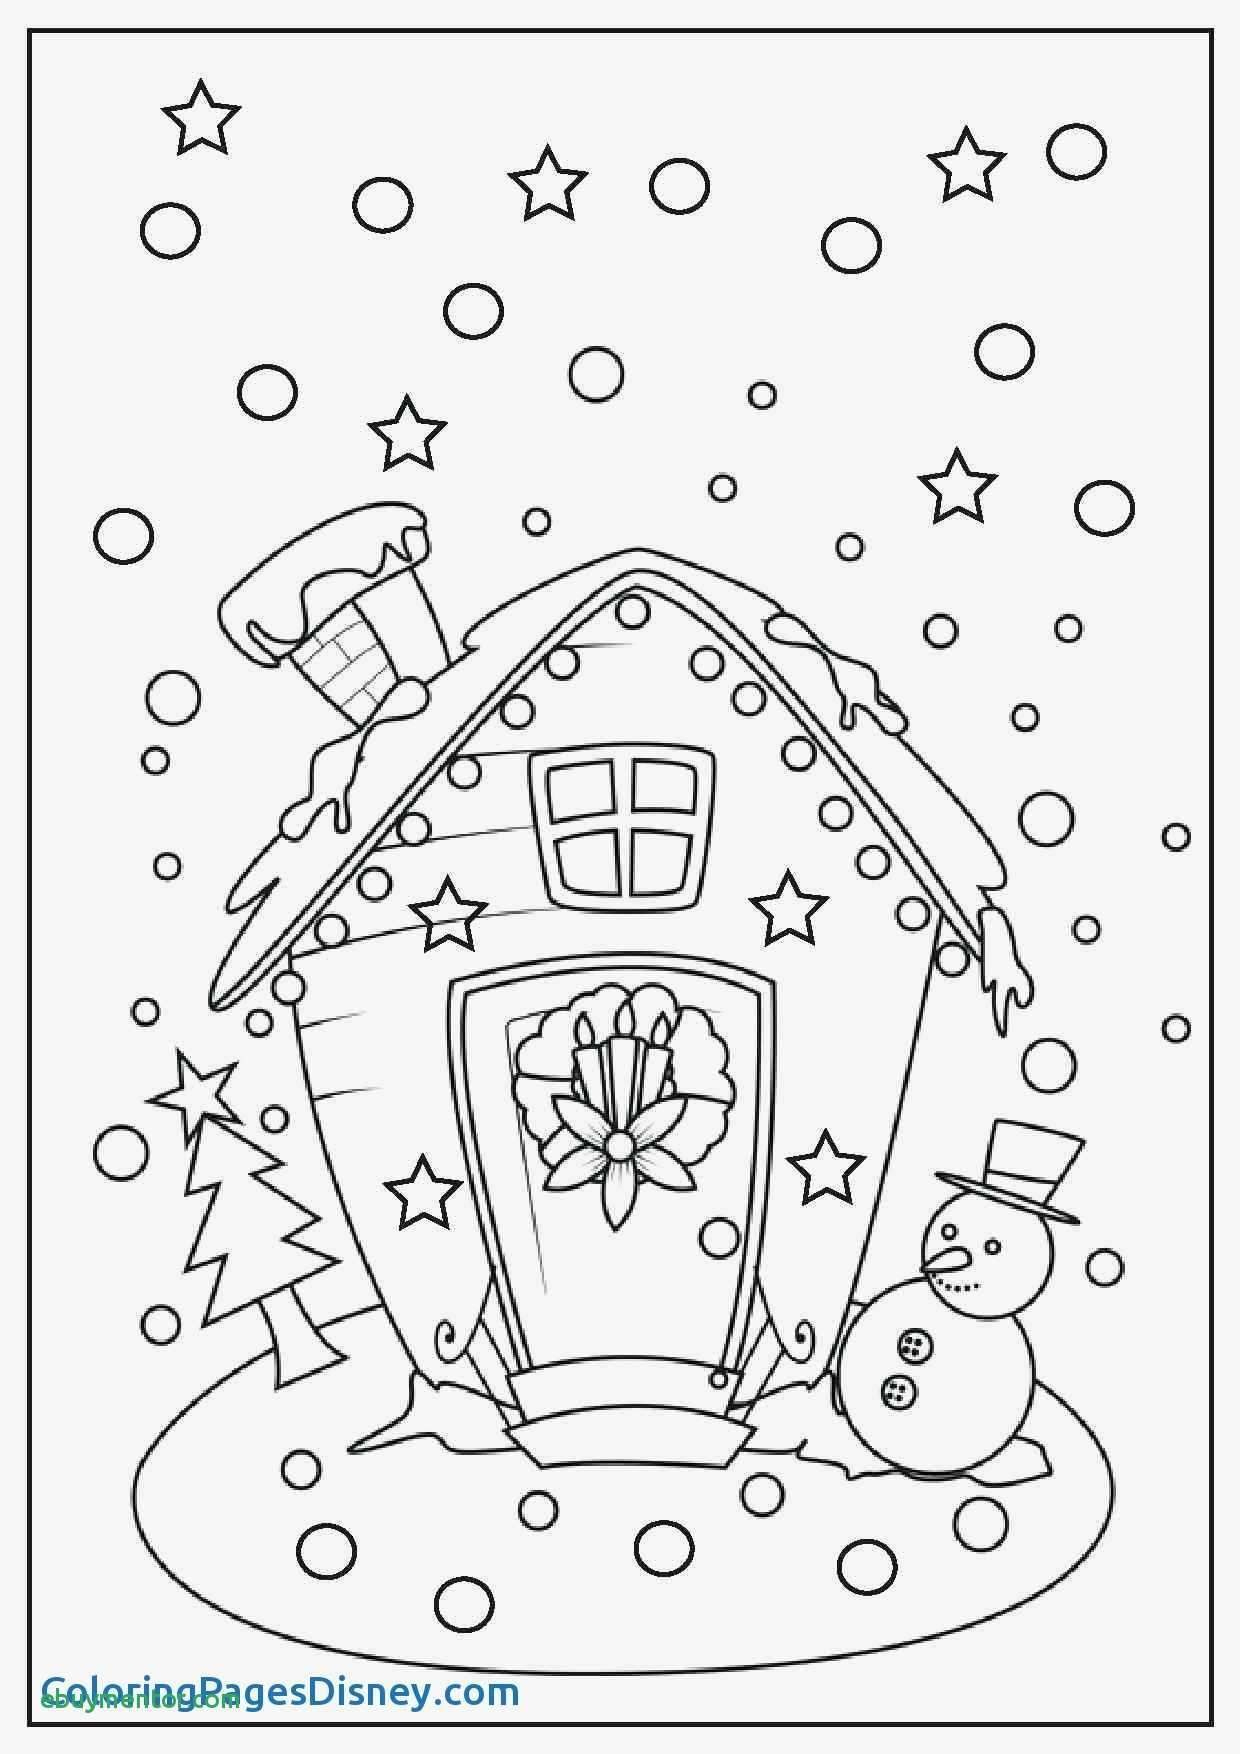 21 Best Of Free Printable Kindergarten Books - Pexels Photo - Free Printable Christmas Books For Kindergarten